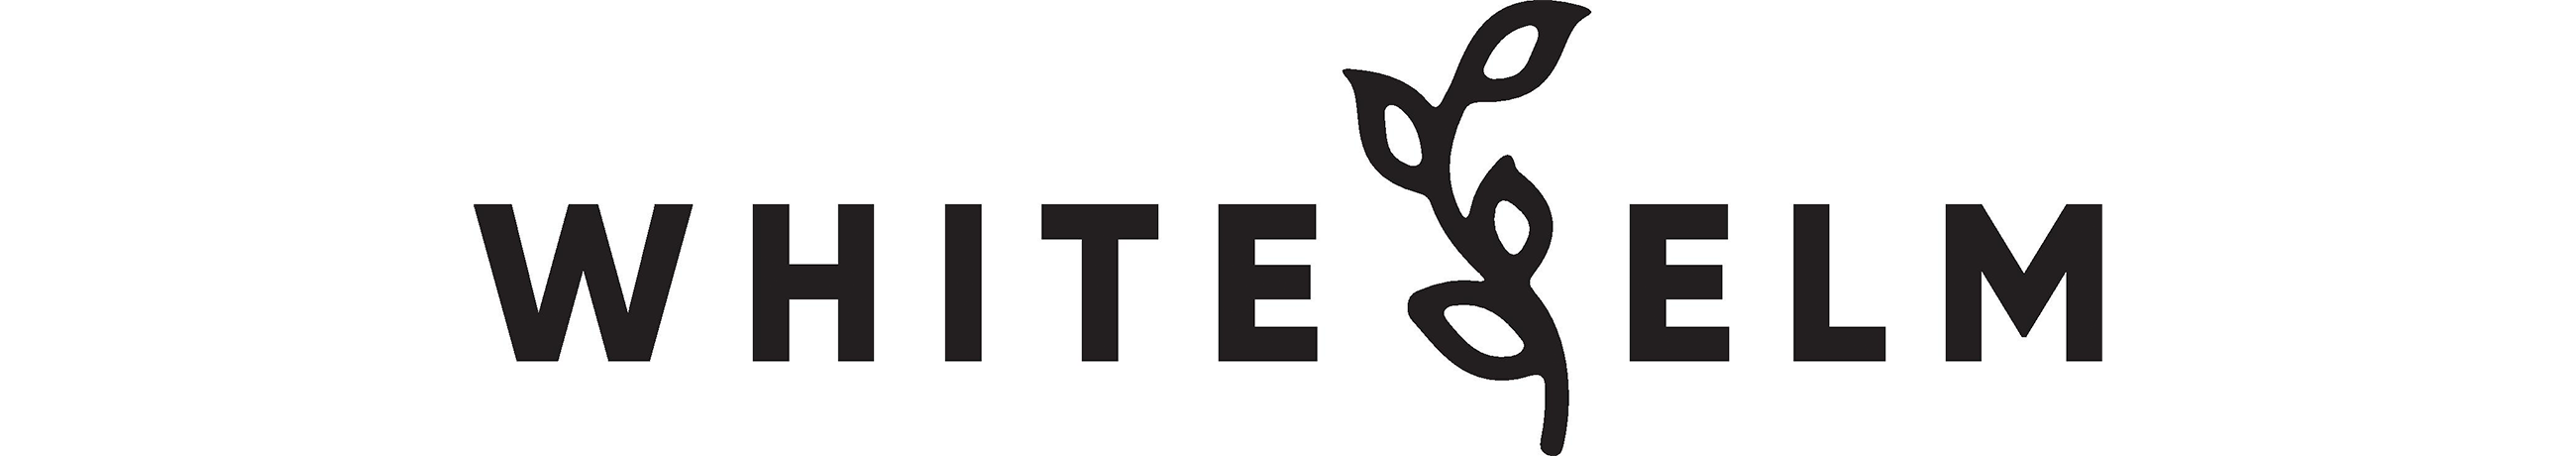 White Elm logo